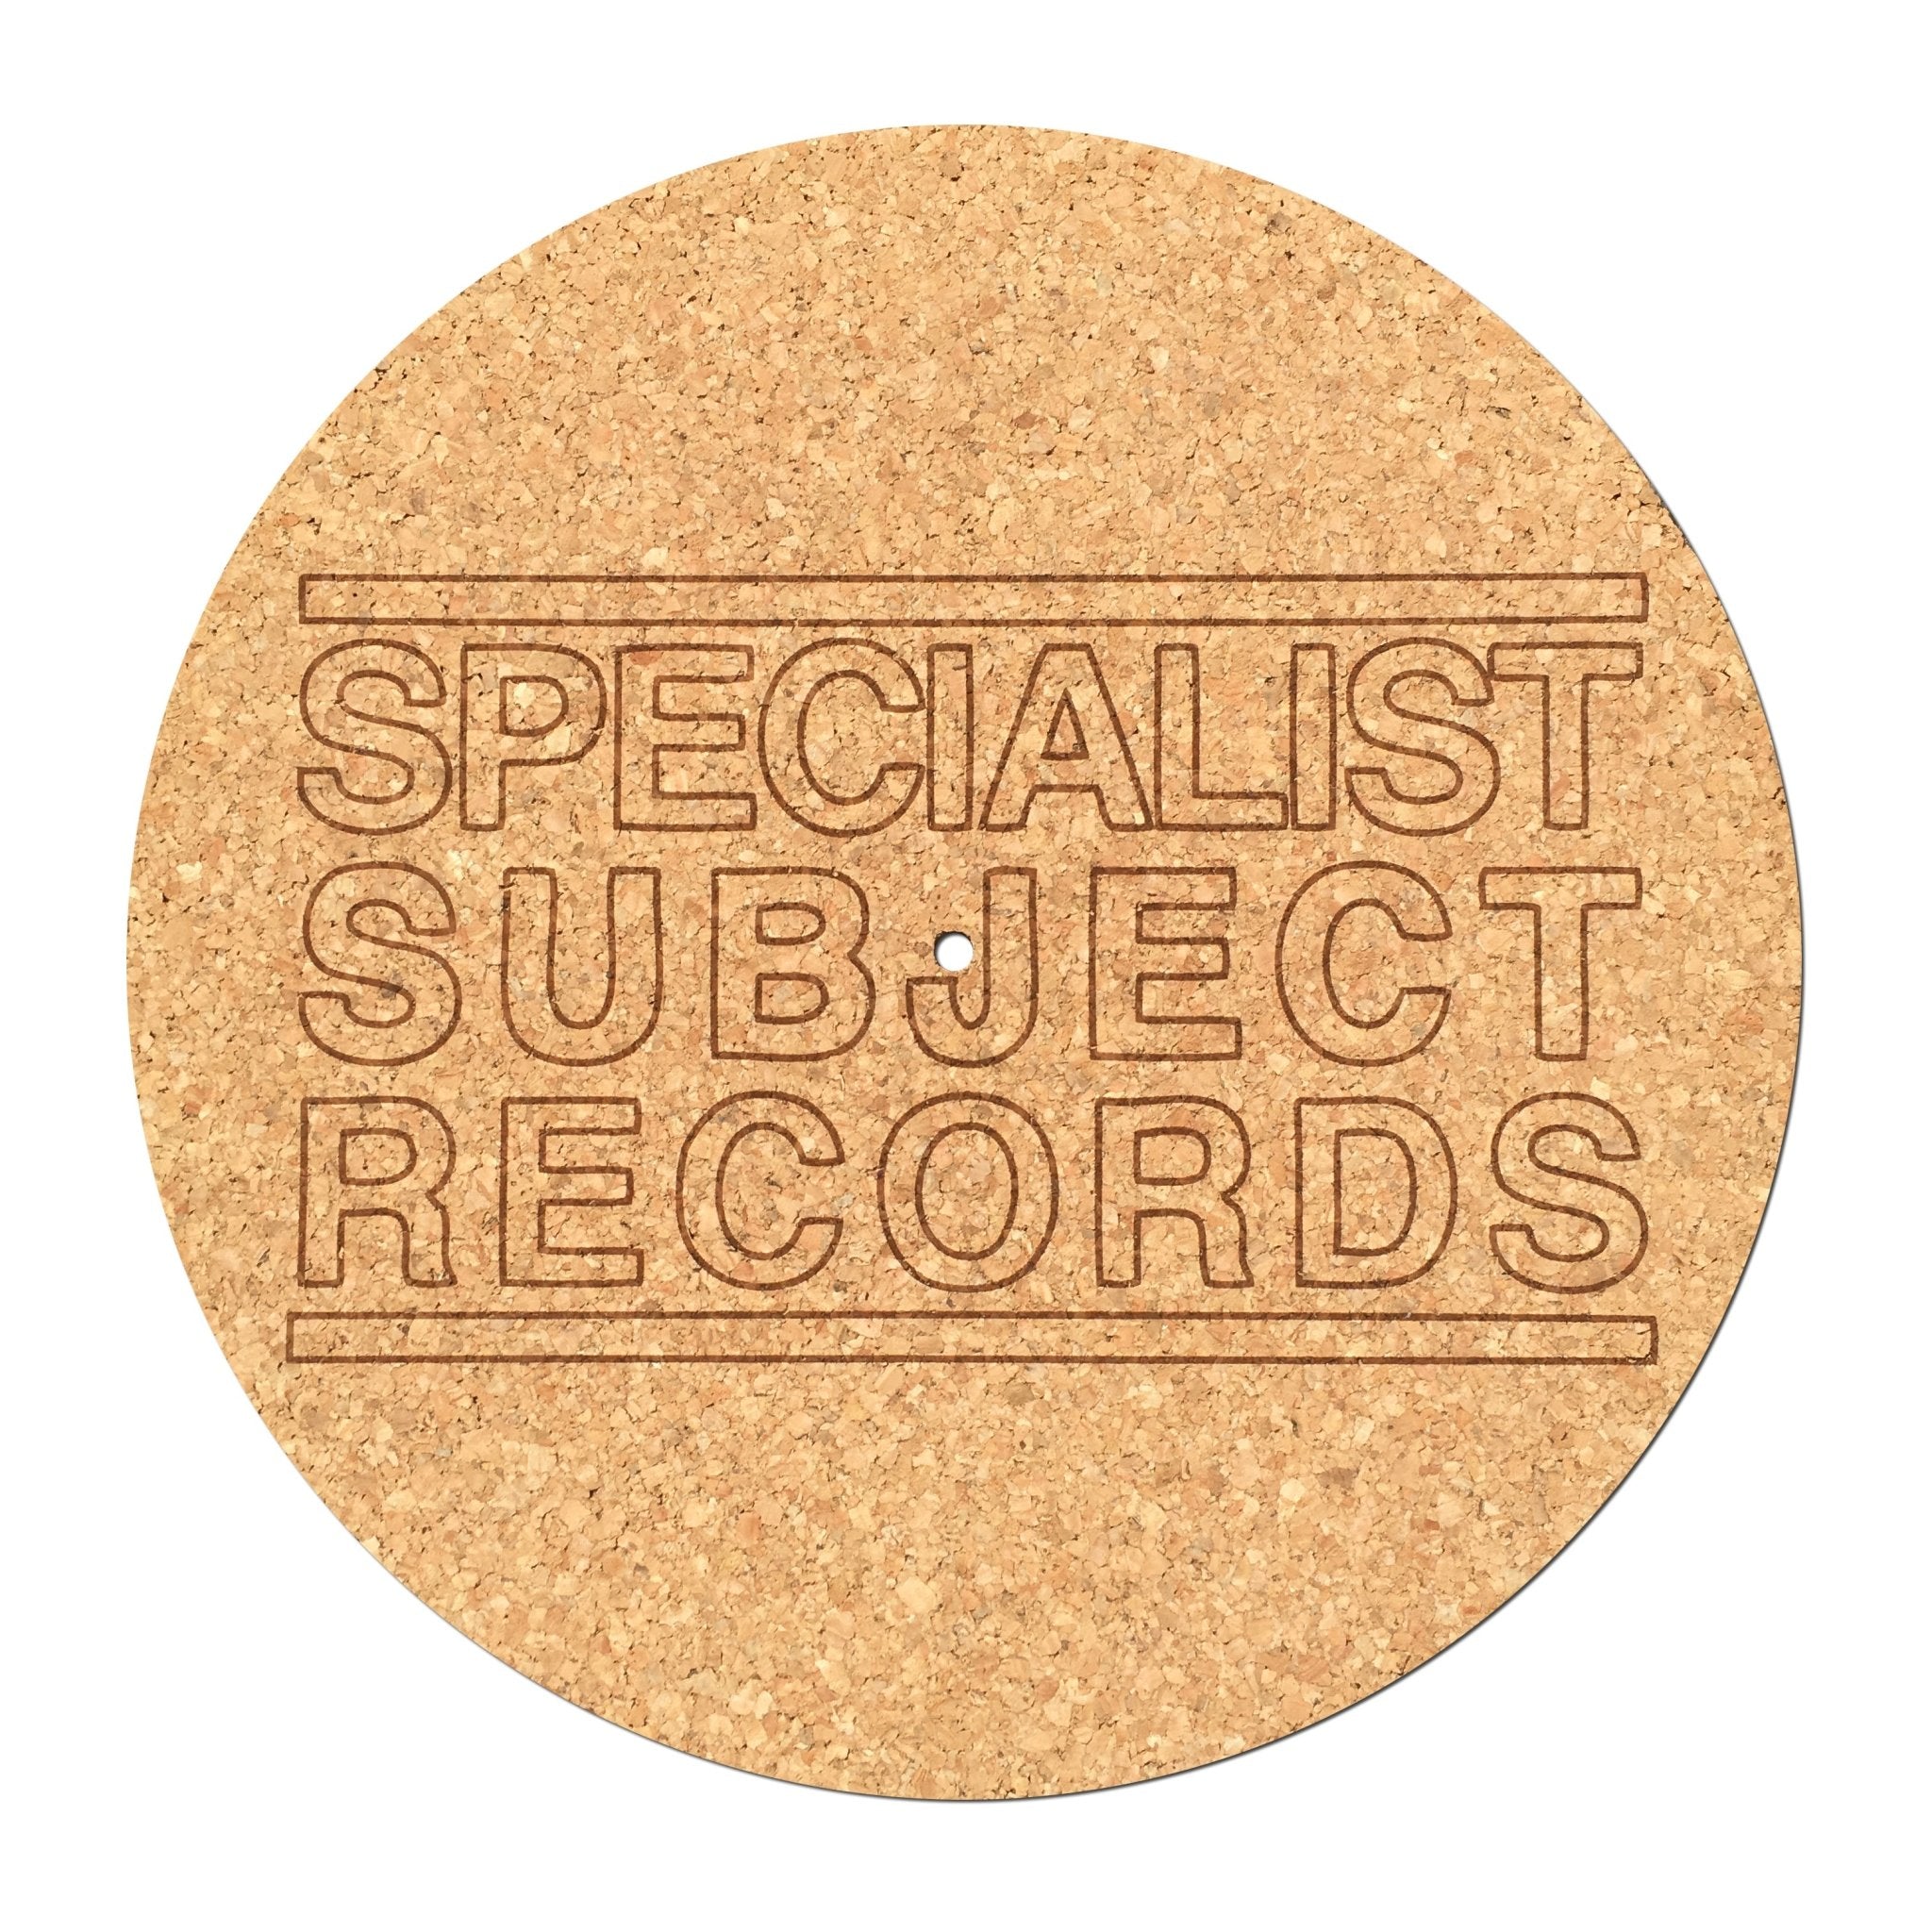 Specialist Subject Cork Slipmat - Merch - Specialist Subject Records